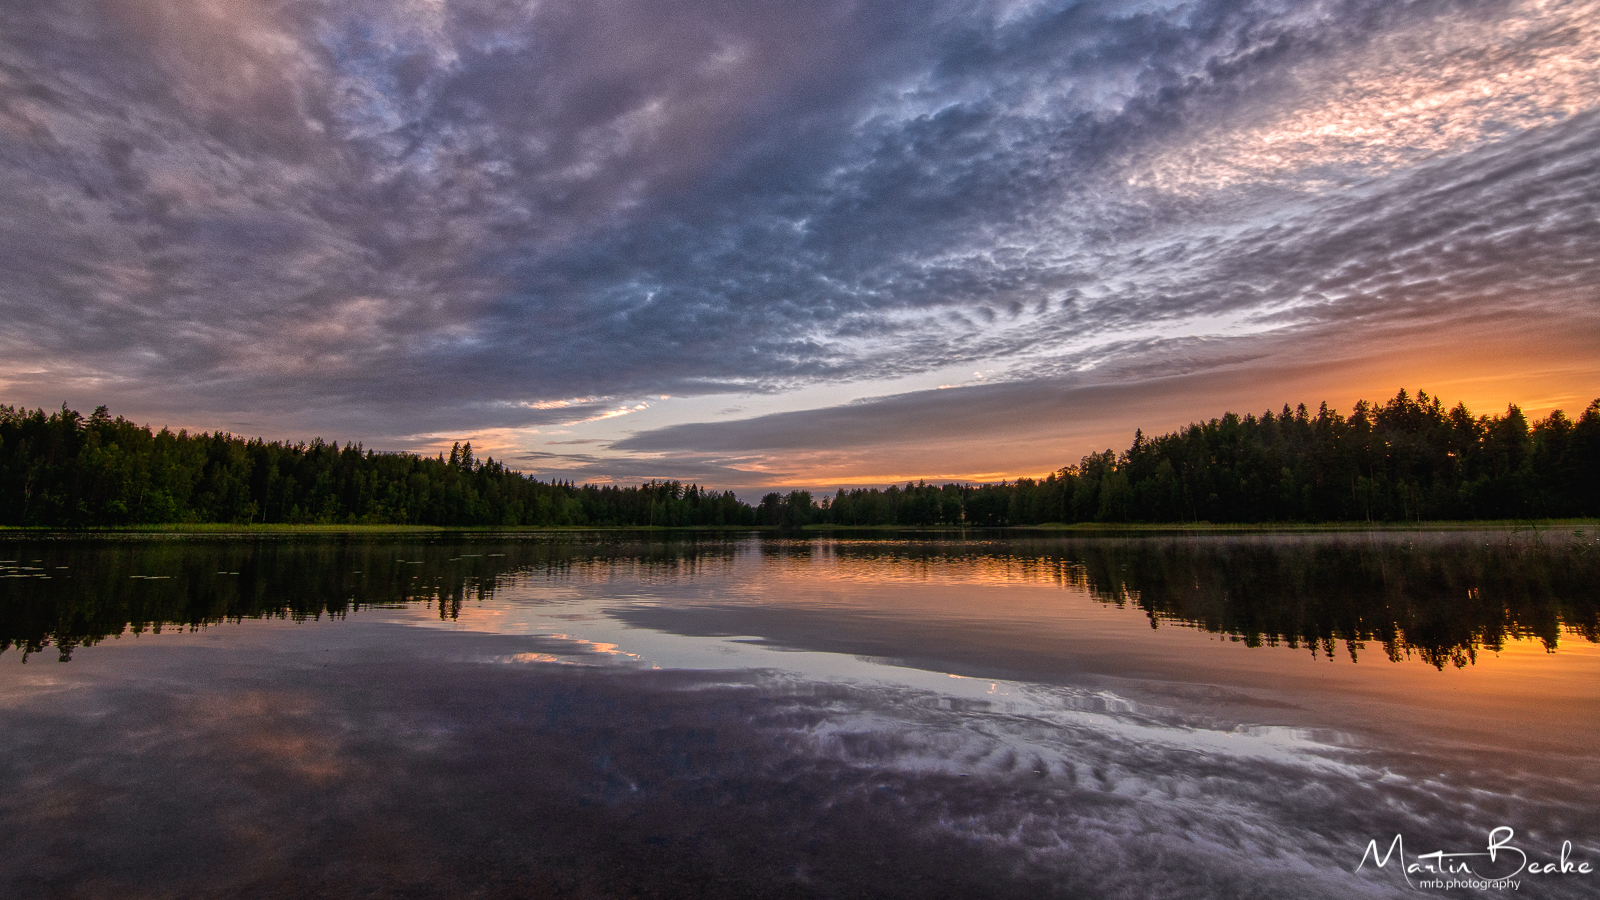 Summer Sunset over Lake, Evo, nr Hameenlinna, Finland